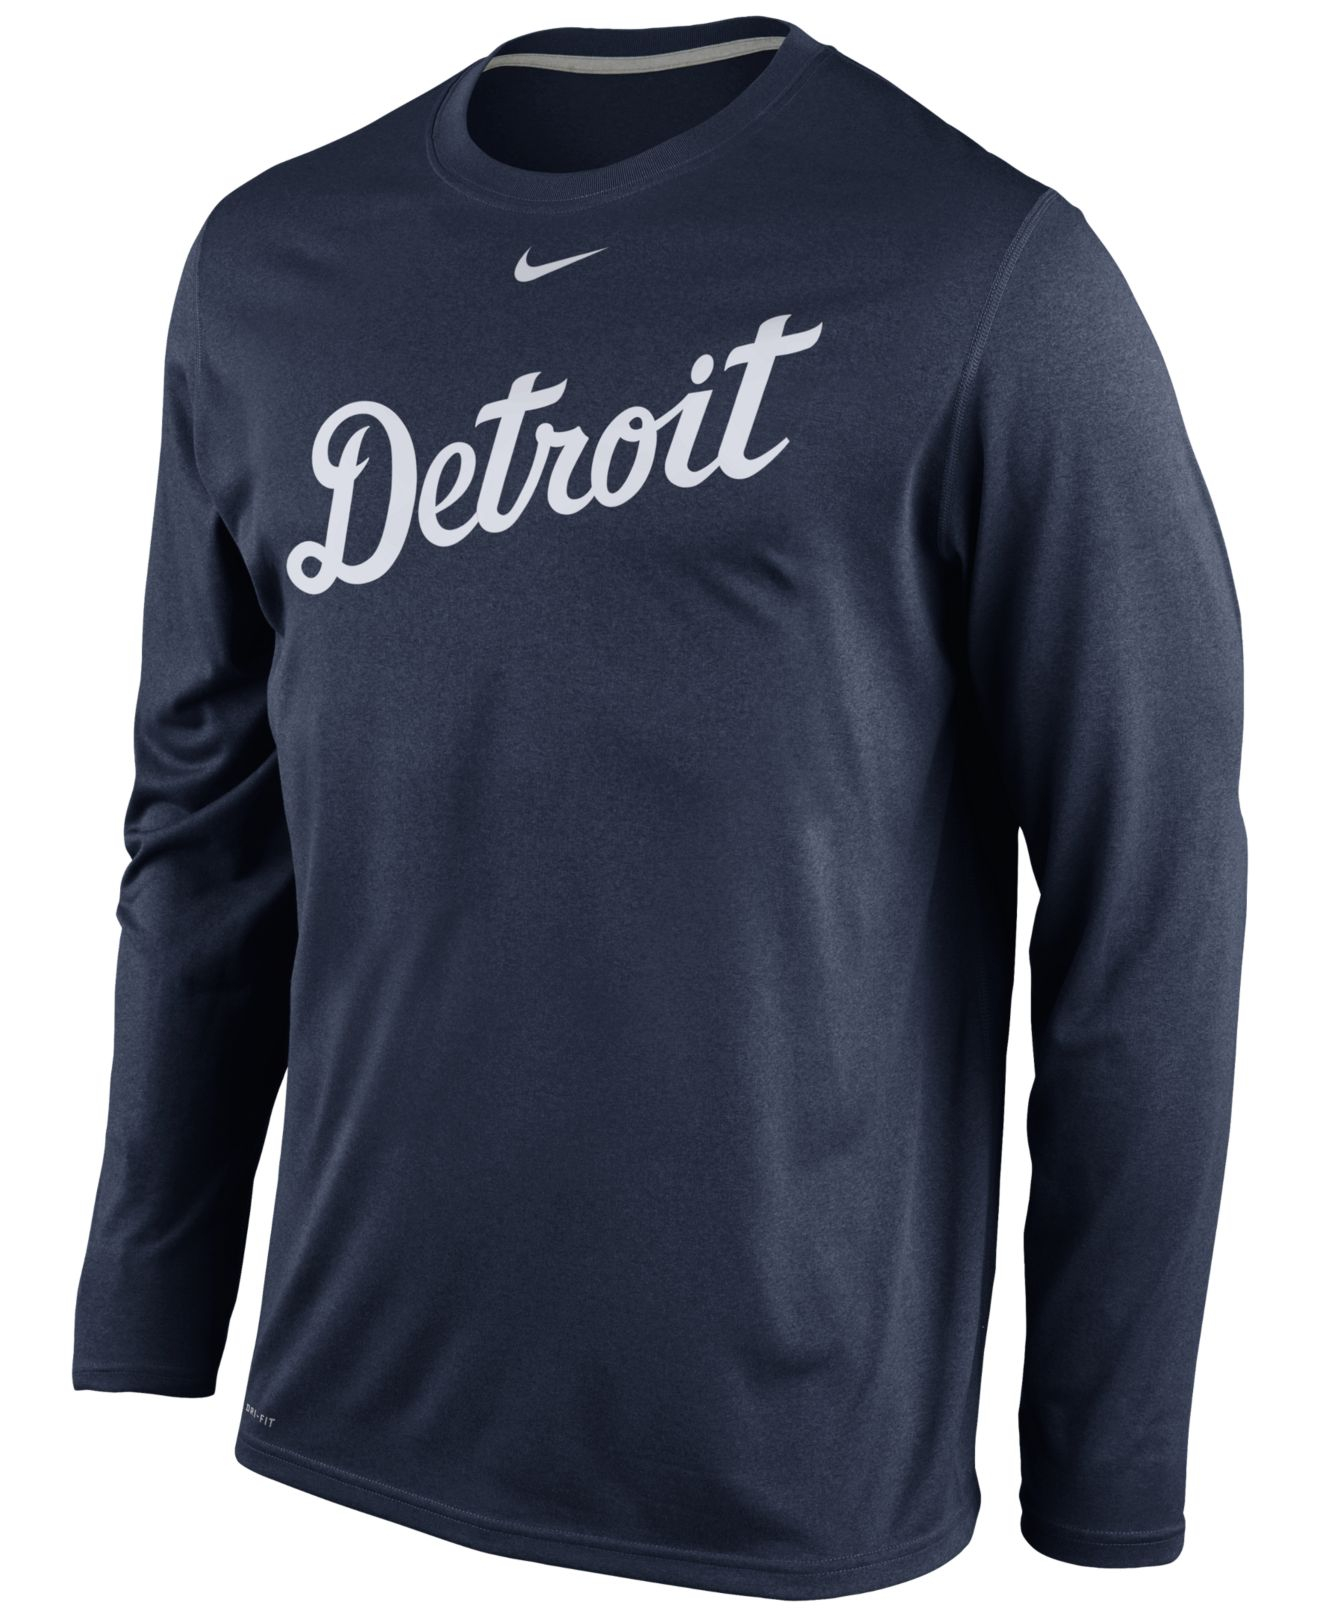 Lyst - Nike Men's Long-sleeve Detroit Tigers Legend T-shirt in Blue for Men